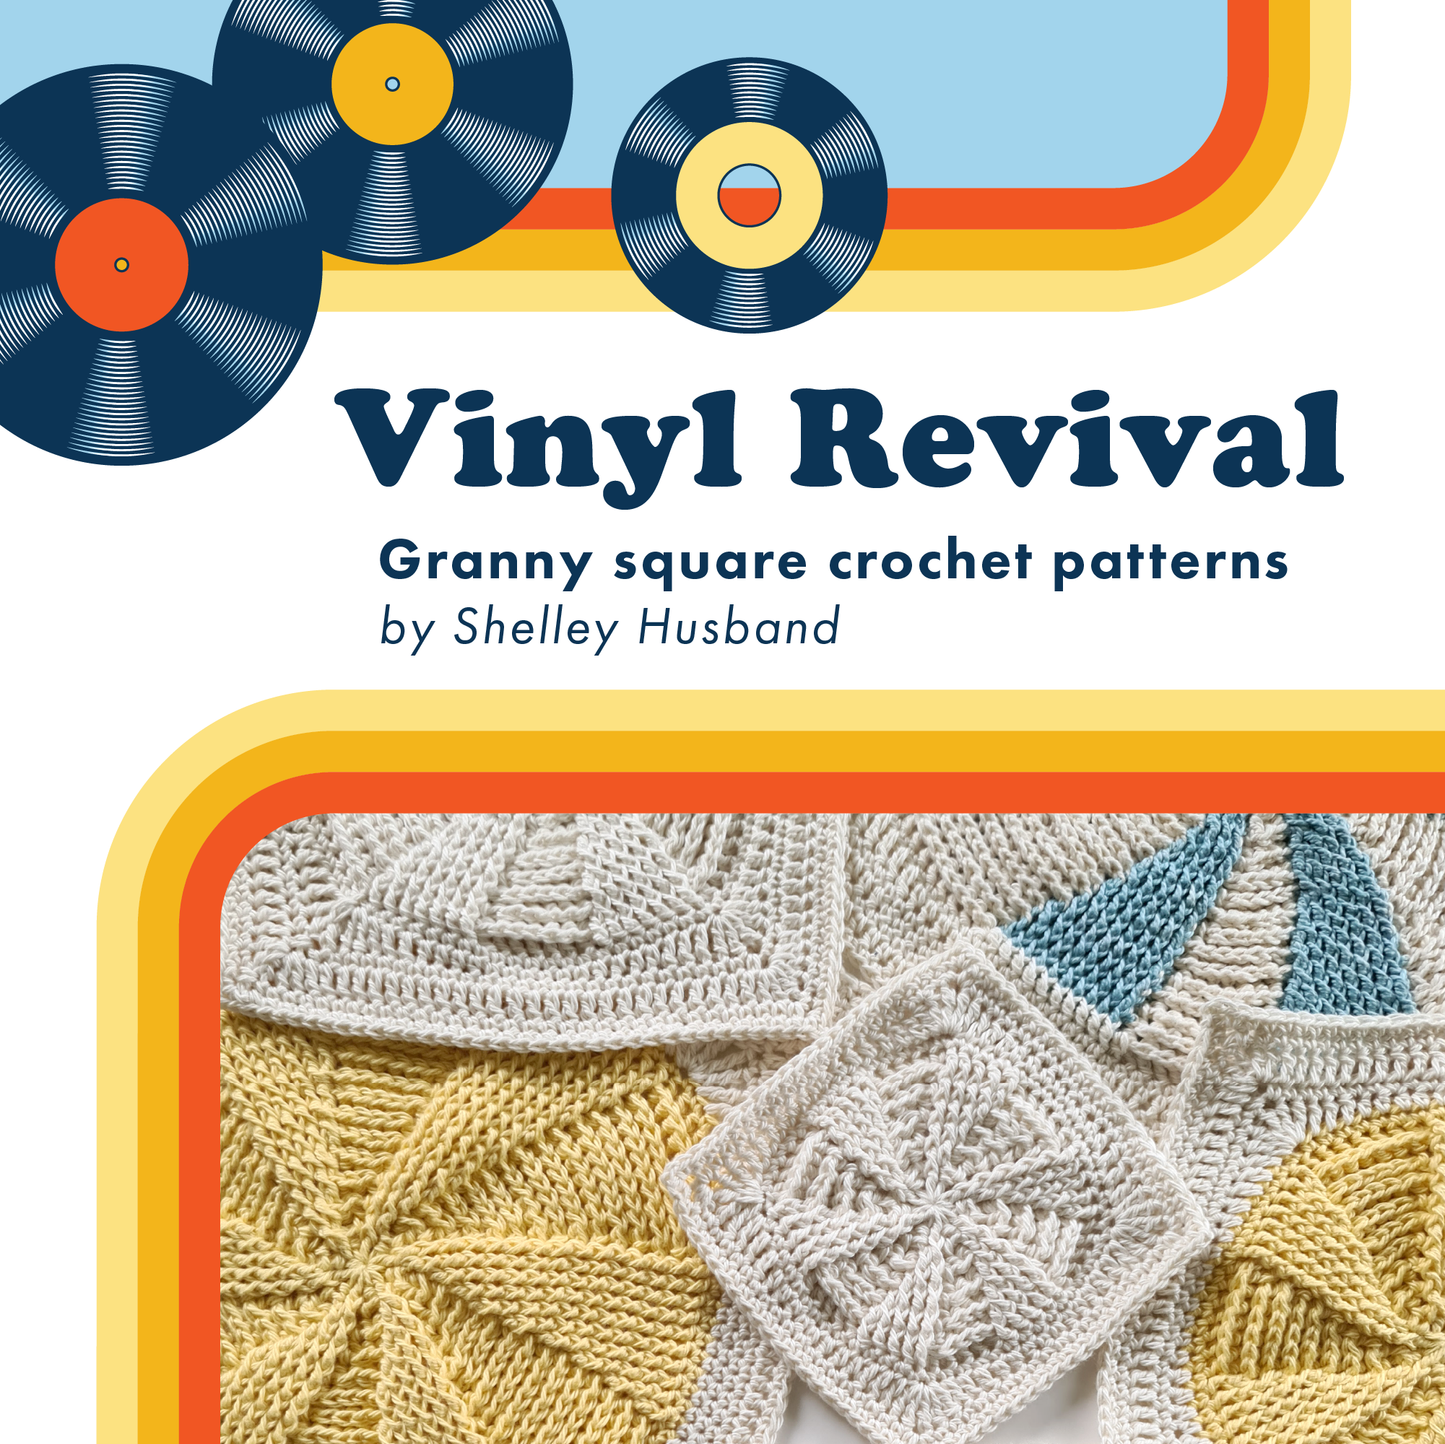 Vinyl Revival Granny square crochet patterns by Shelley Husband